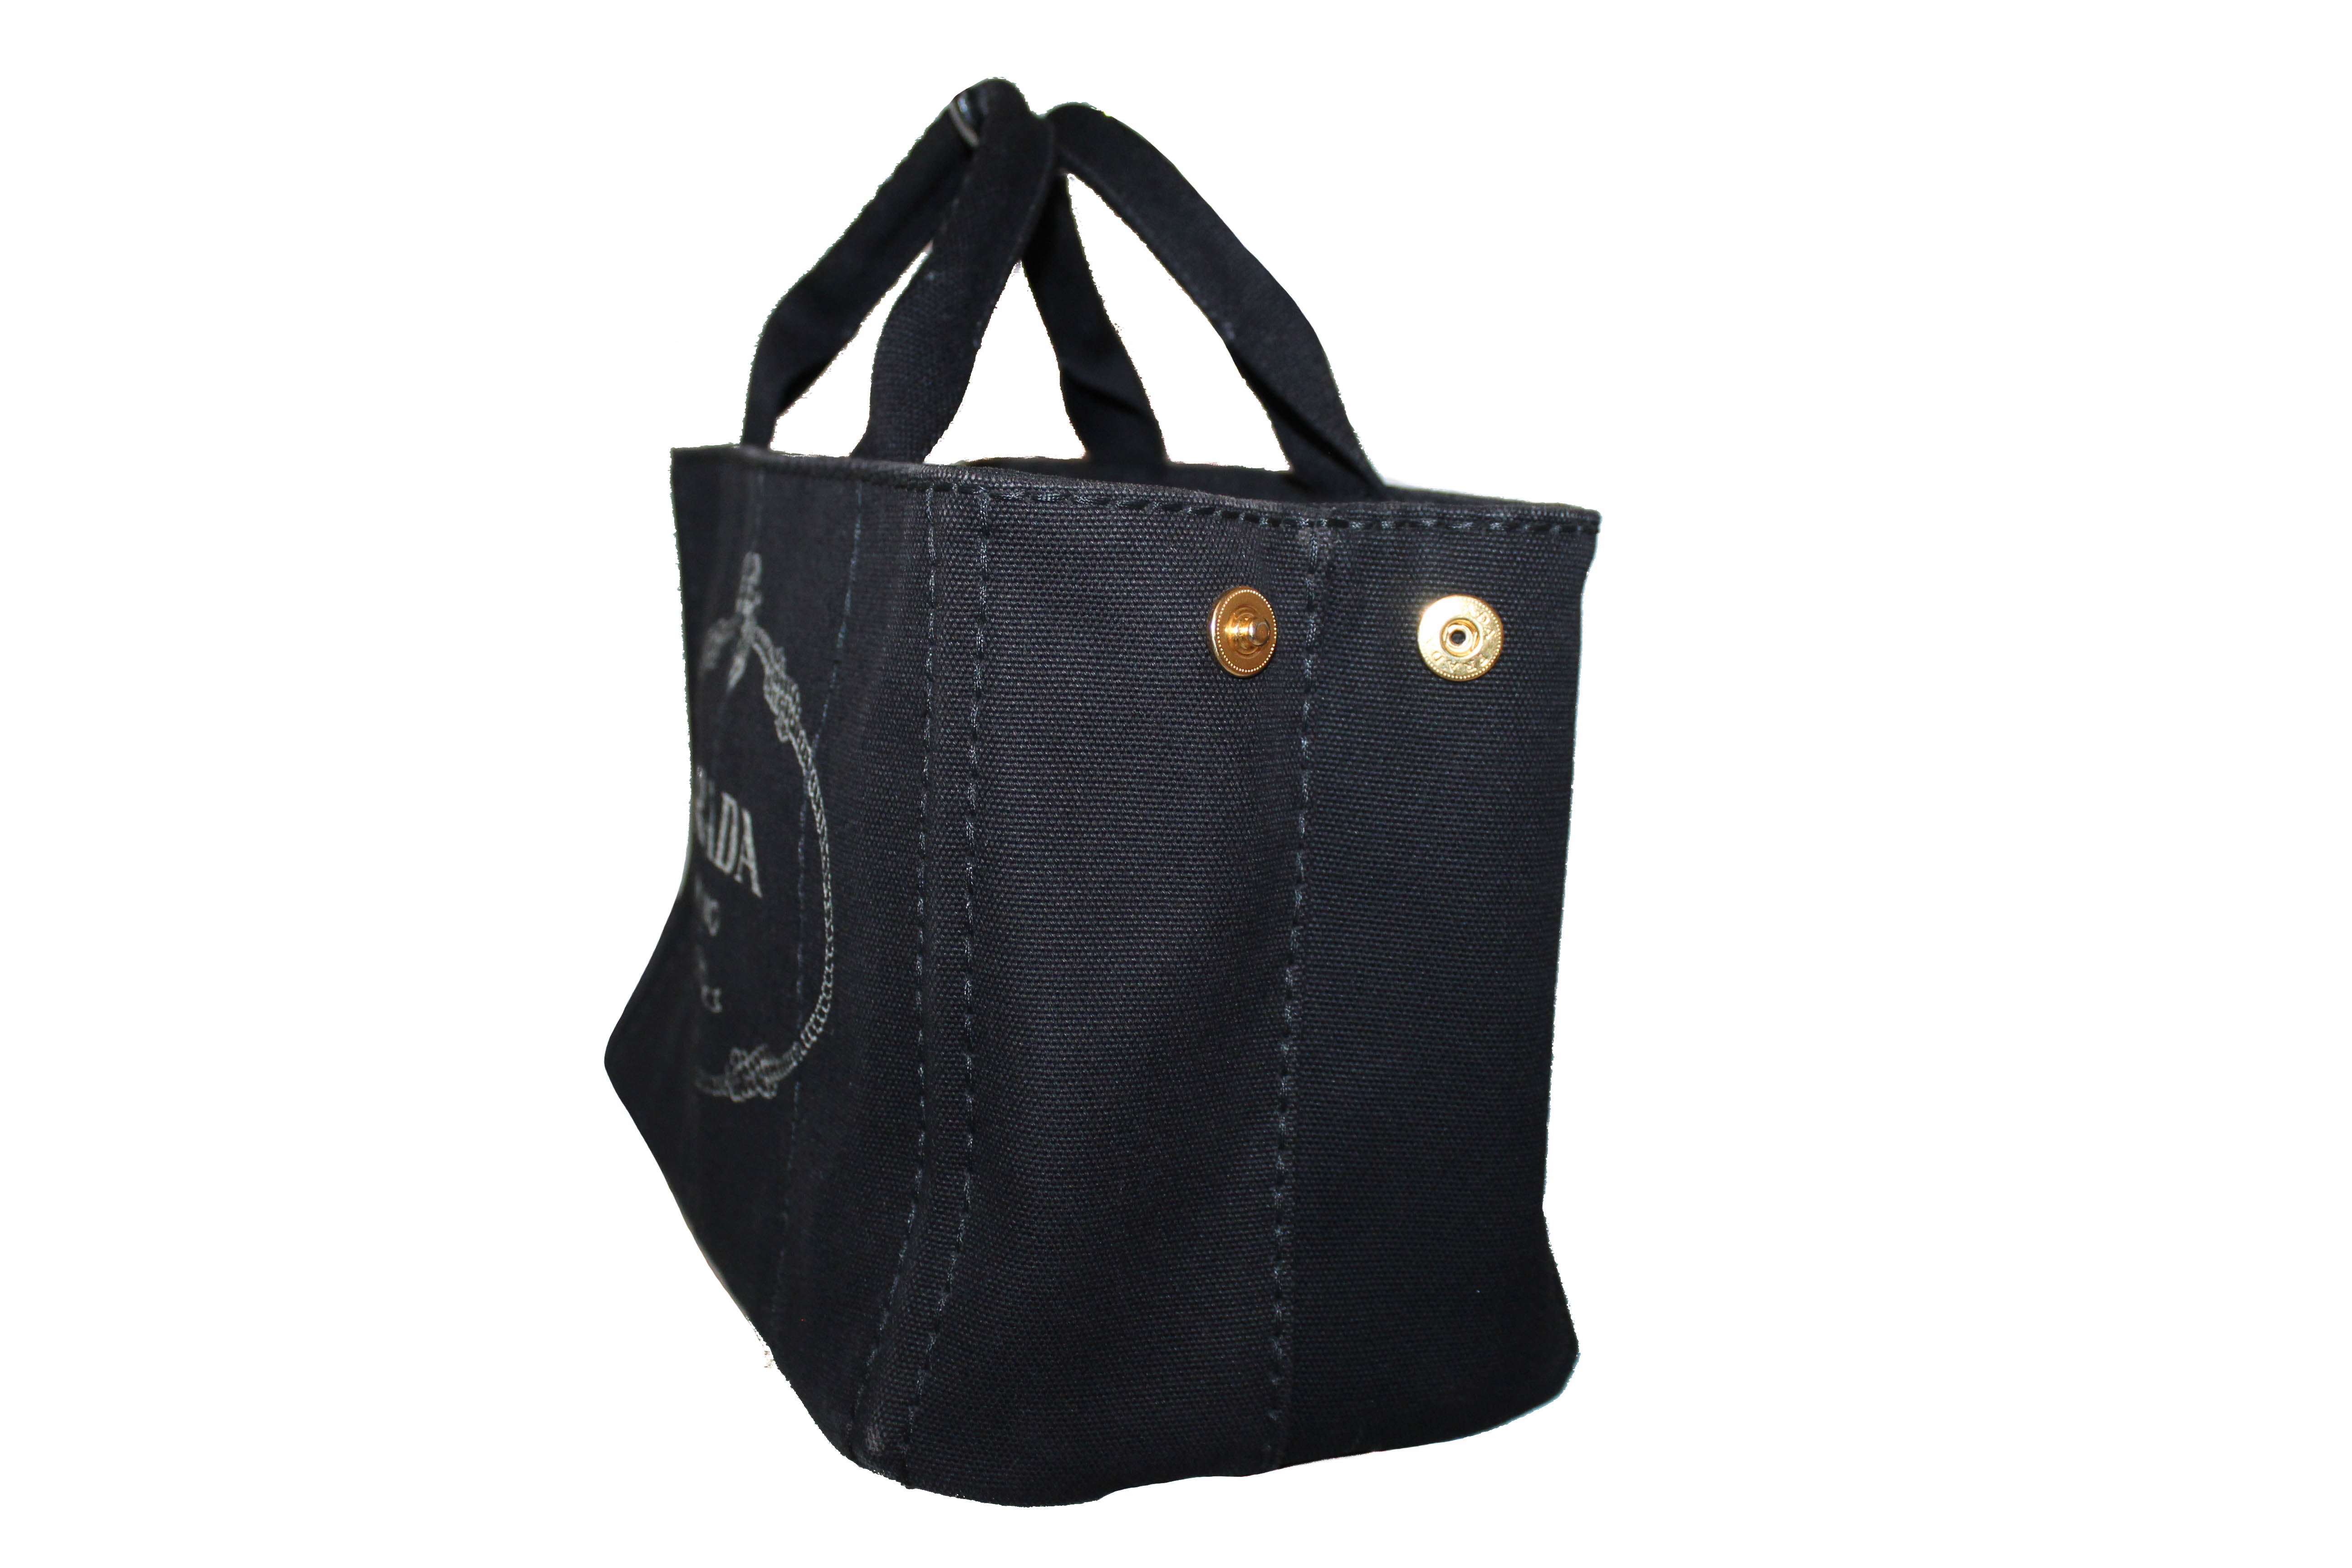 Authentic Prada Black Small Canapa Fabric Printed Tote Handbag